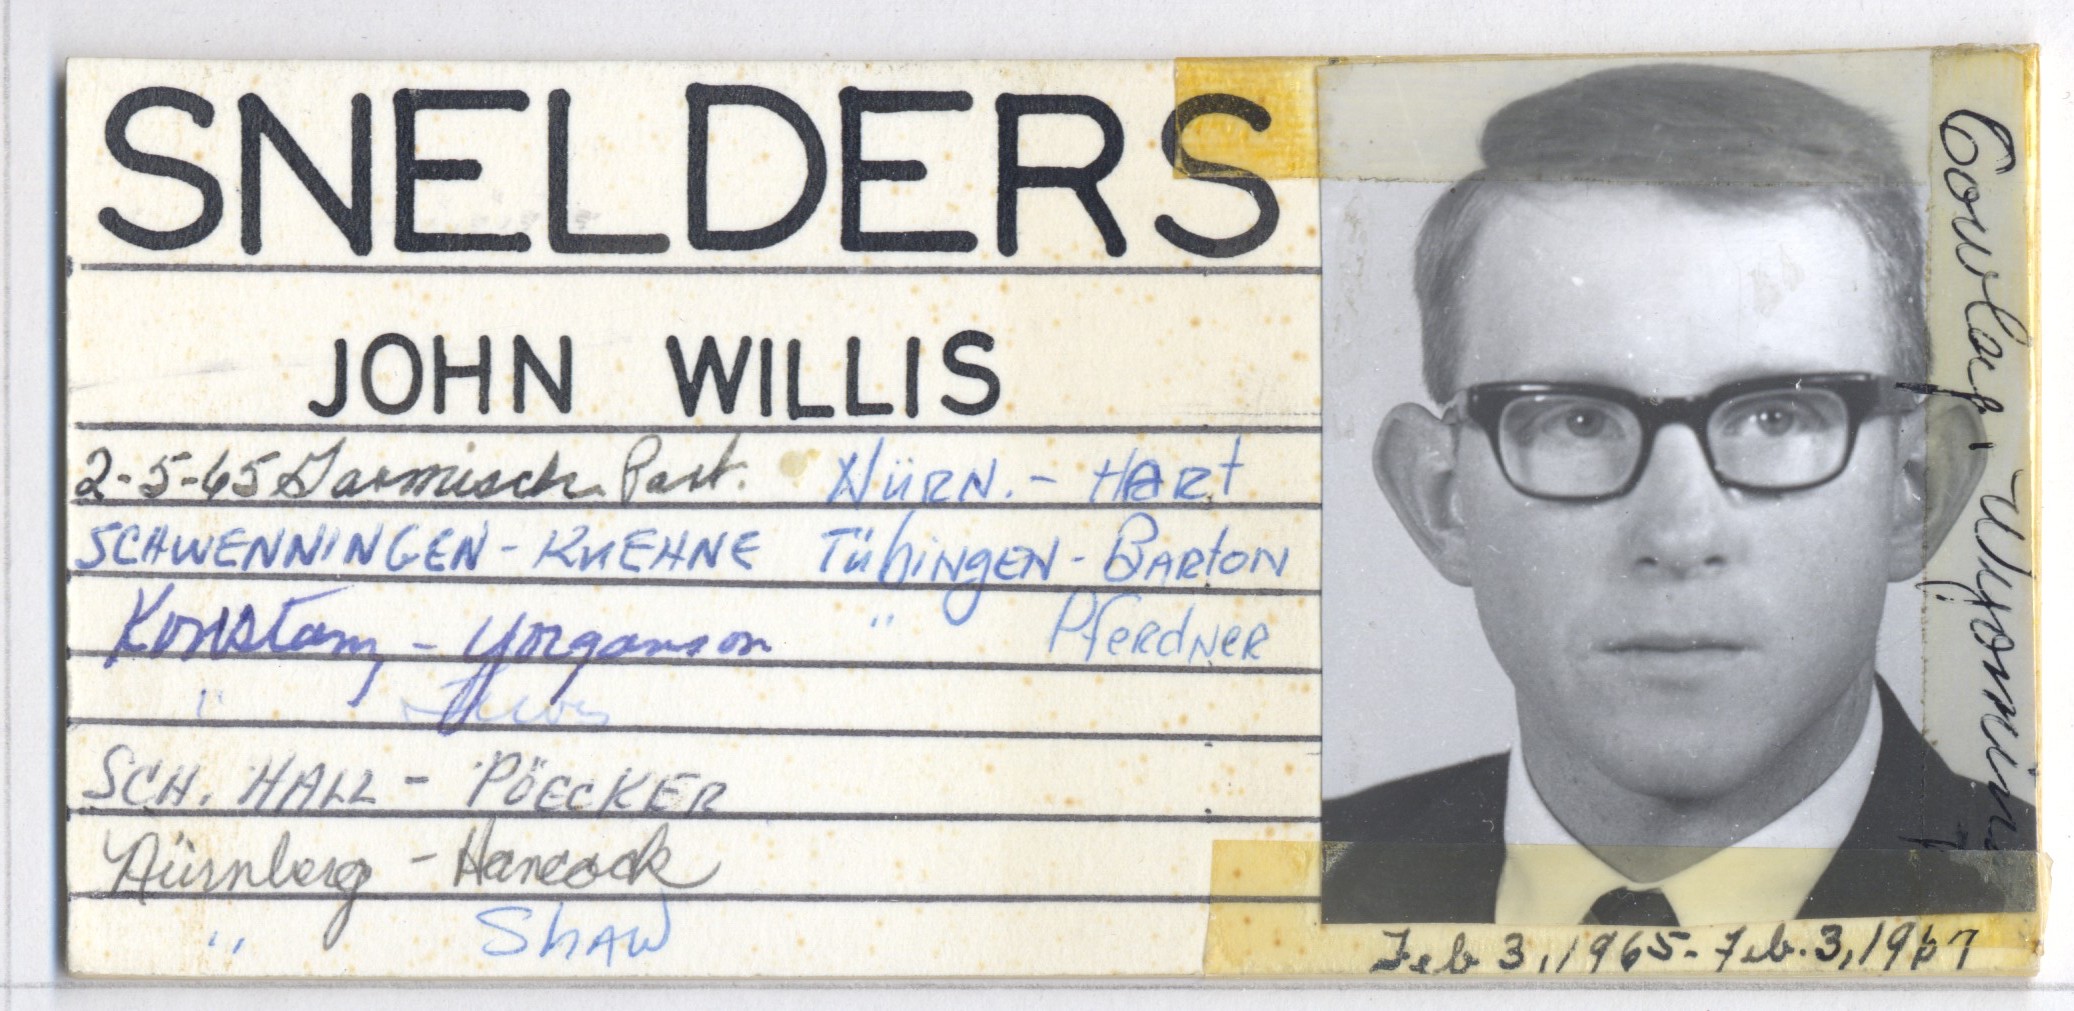 Snelders, John Willis